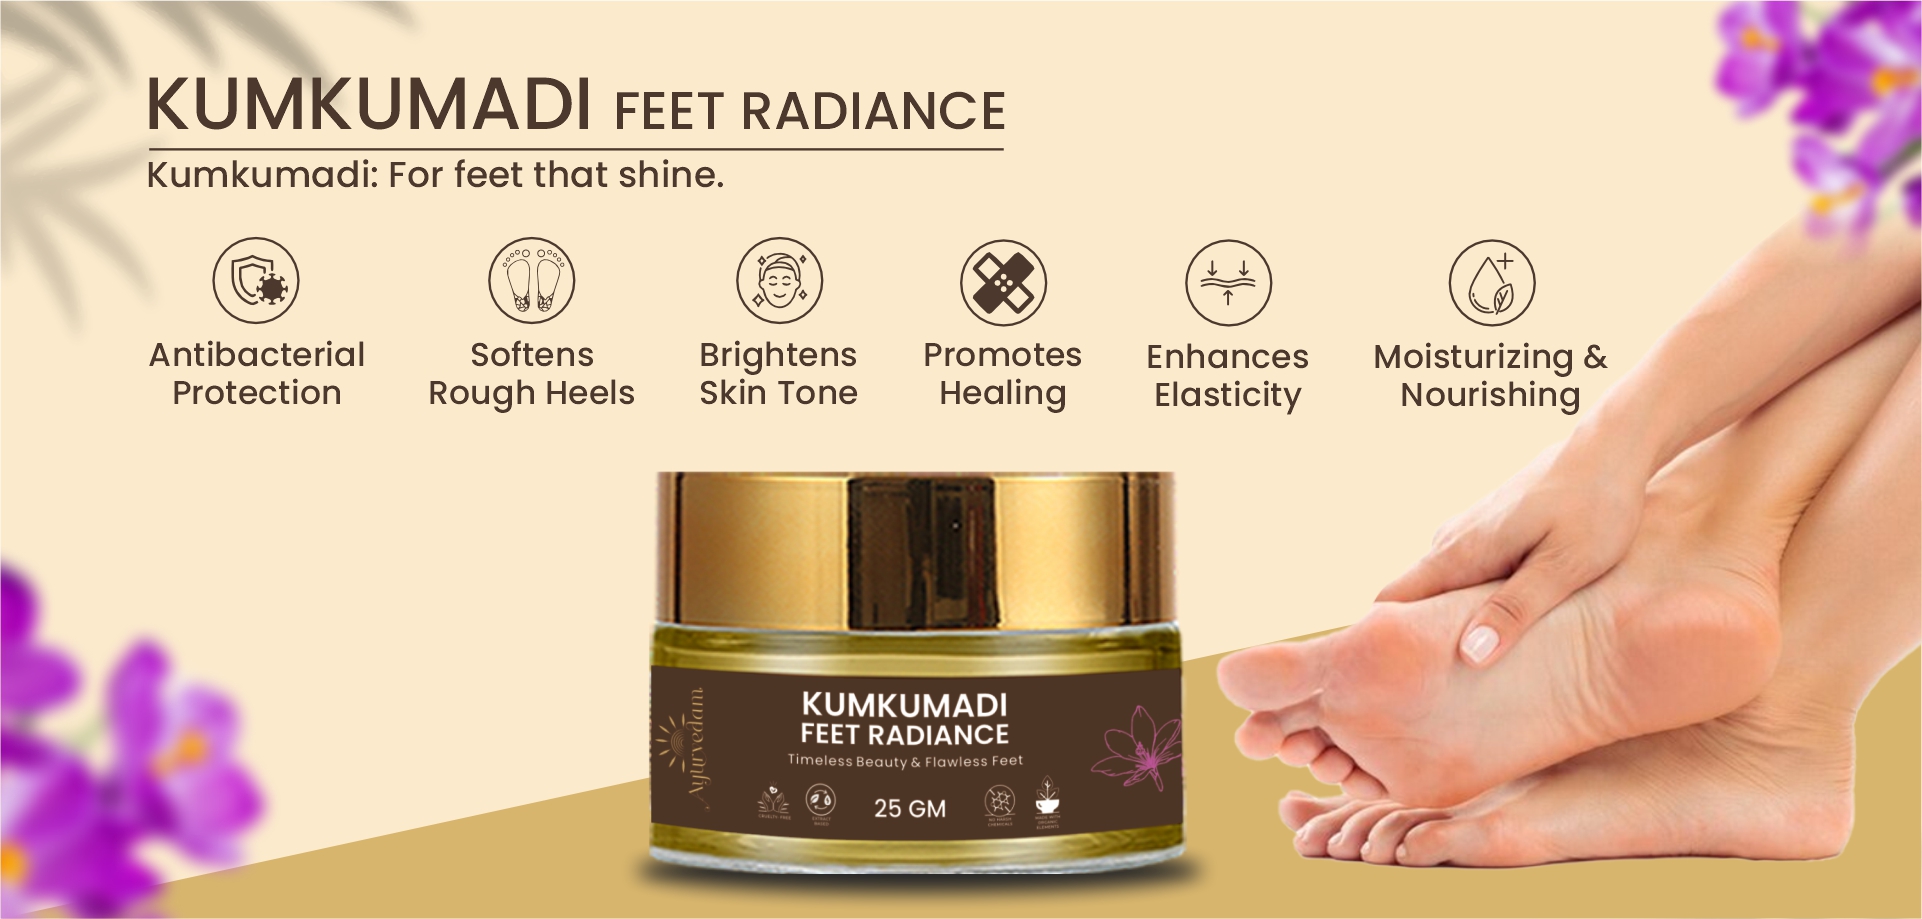 Kumkumadi Feet Radiance Cream Banner with it's benefits listed